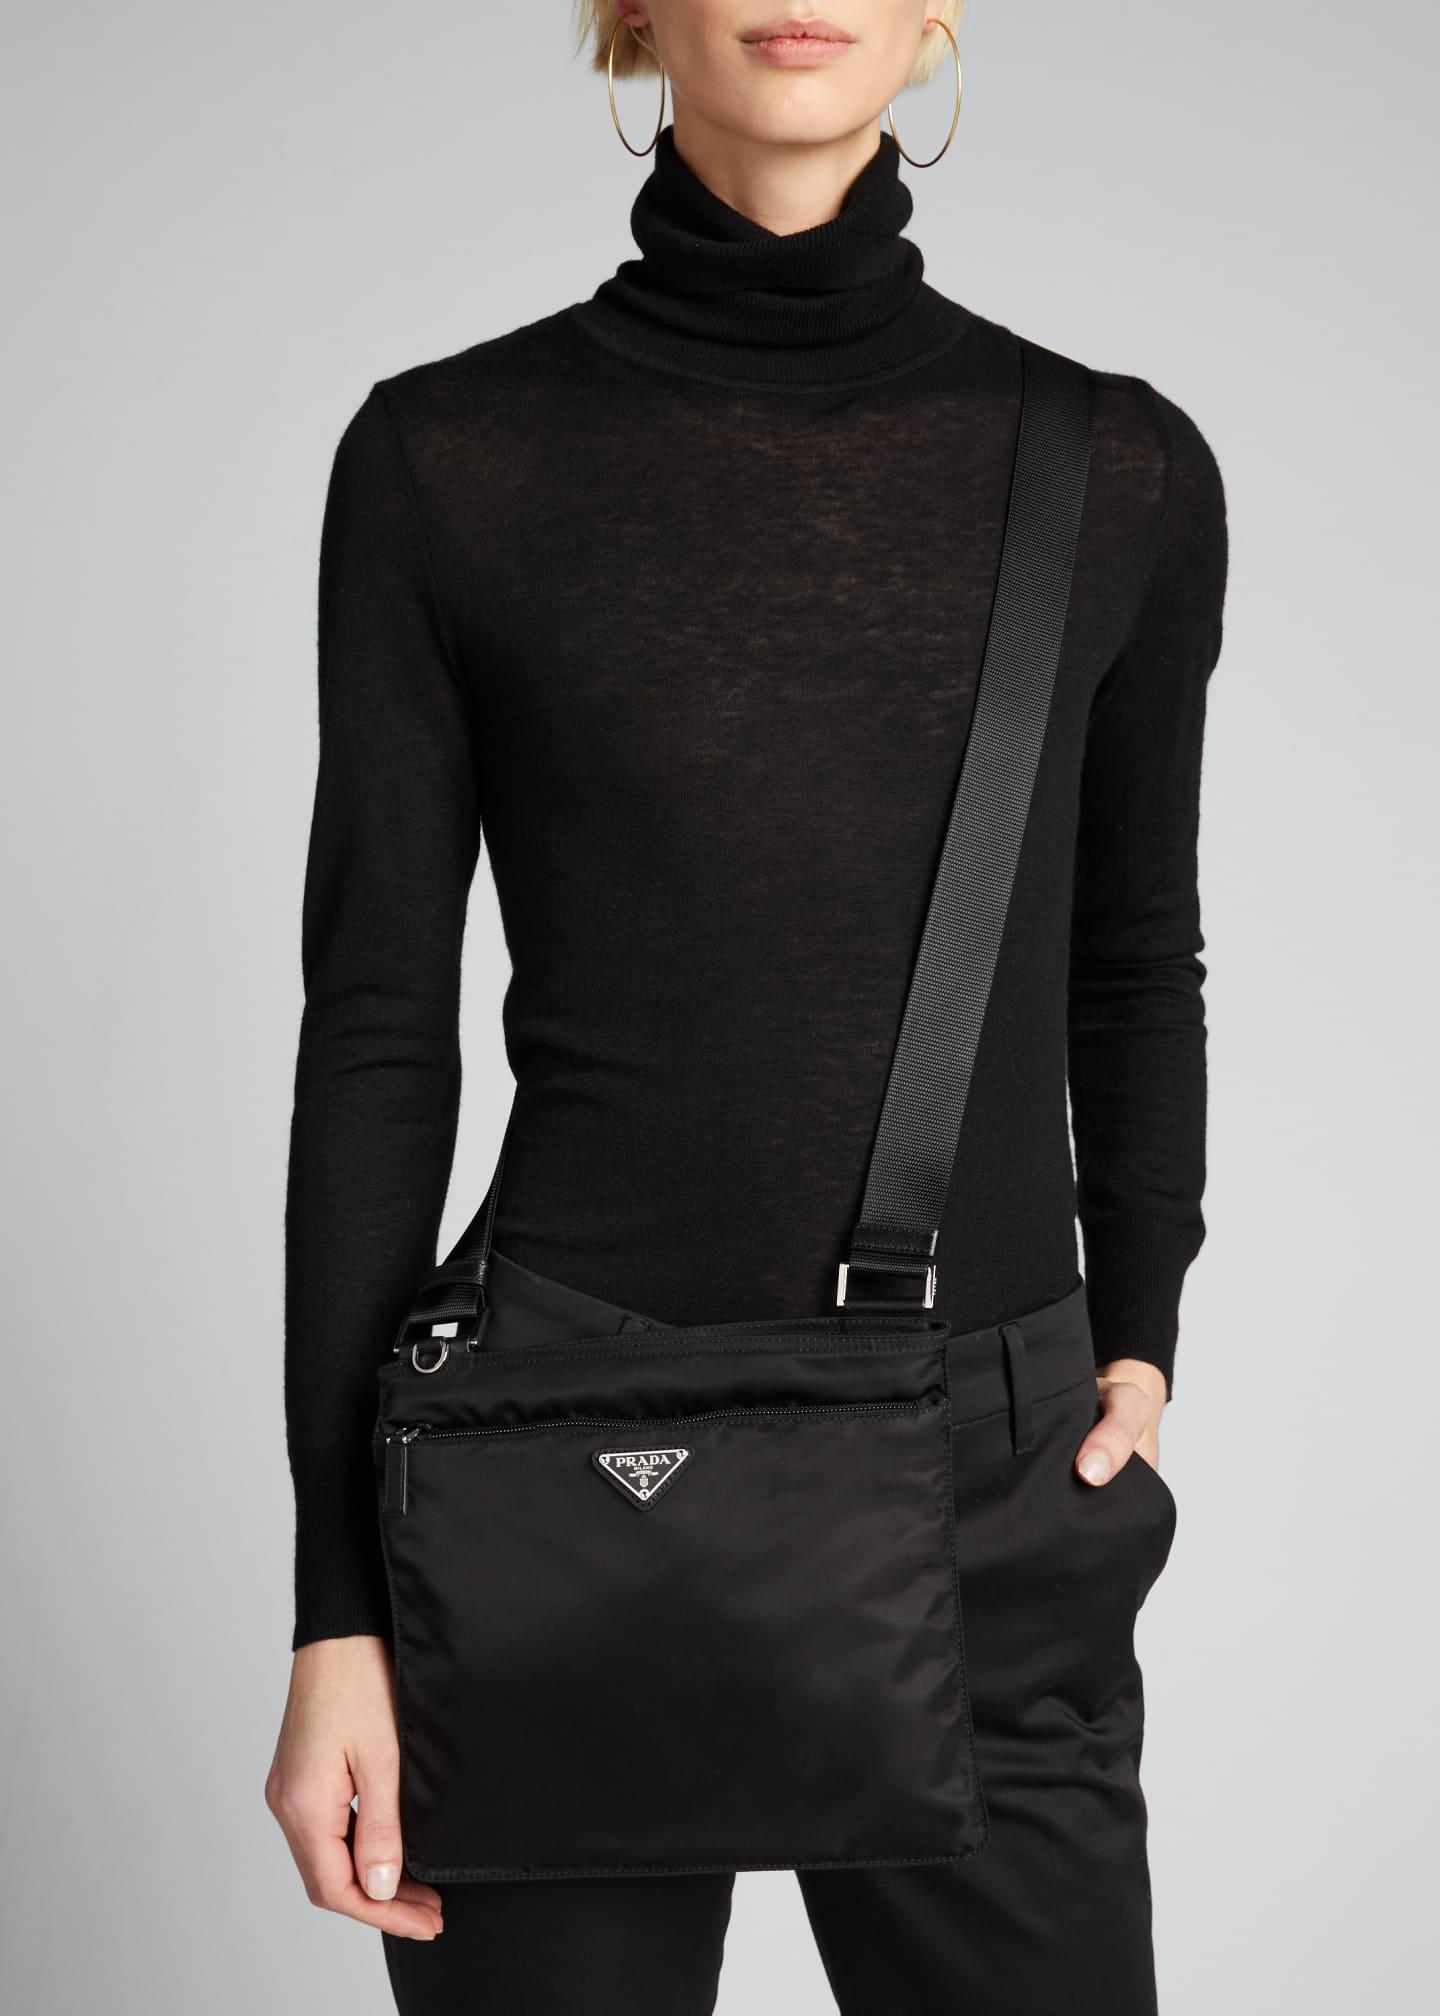 Prada Small Nylon Crossbody Bag in Black - Lyst